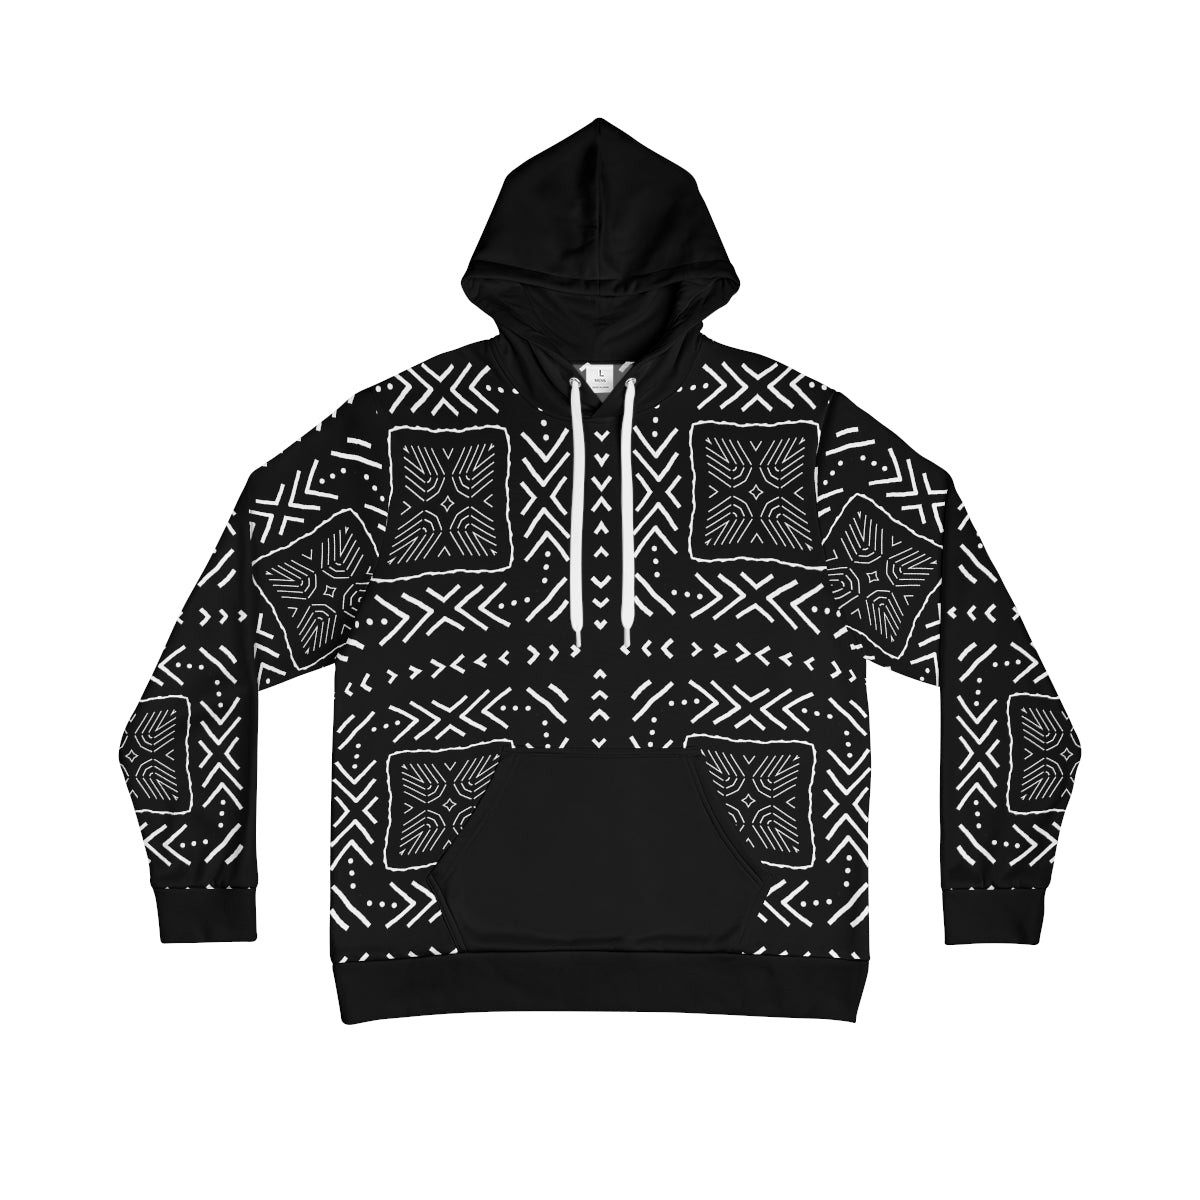 Mens Sweatshirt Hoodie Black and White Mudcloth Print Design